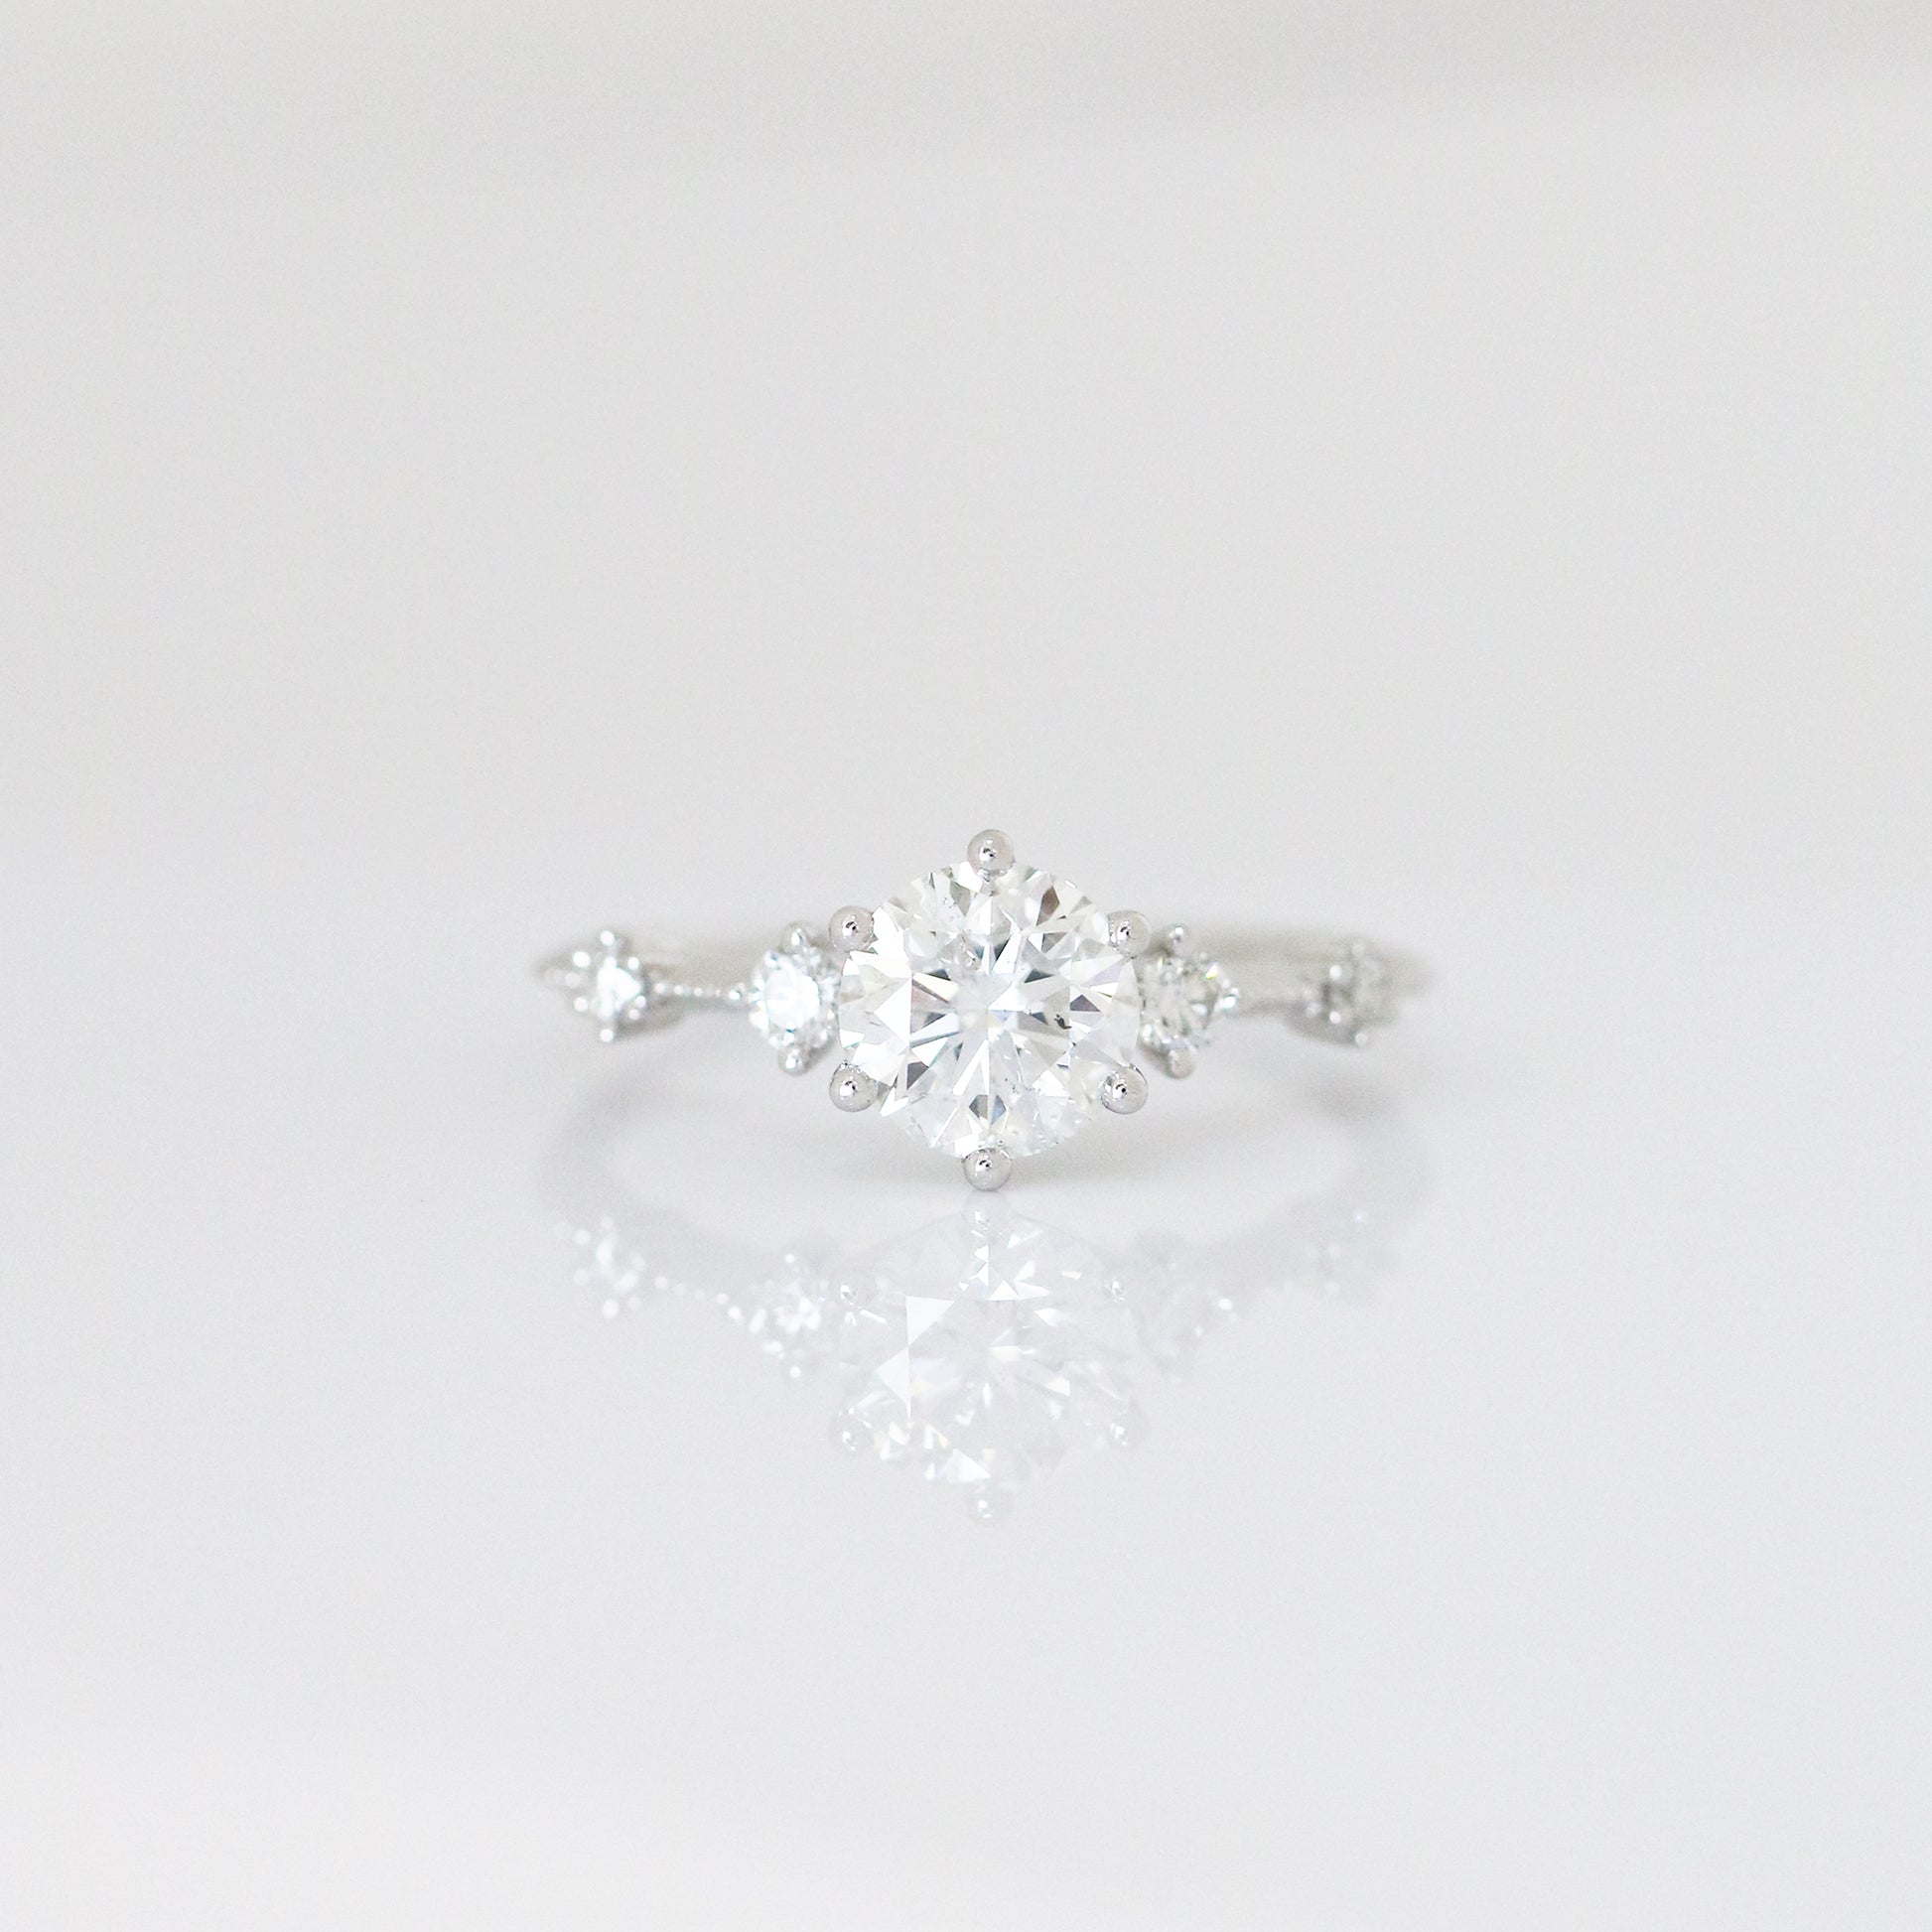 Datura Vintage 18k White Gold 6-Prong Round Brilliant Diamond Engagement Ring Setting 18k白金六爪浪漫復古求婚鑽石戒指款式